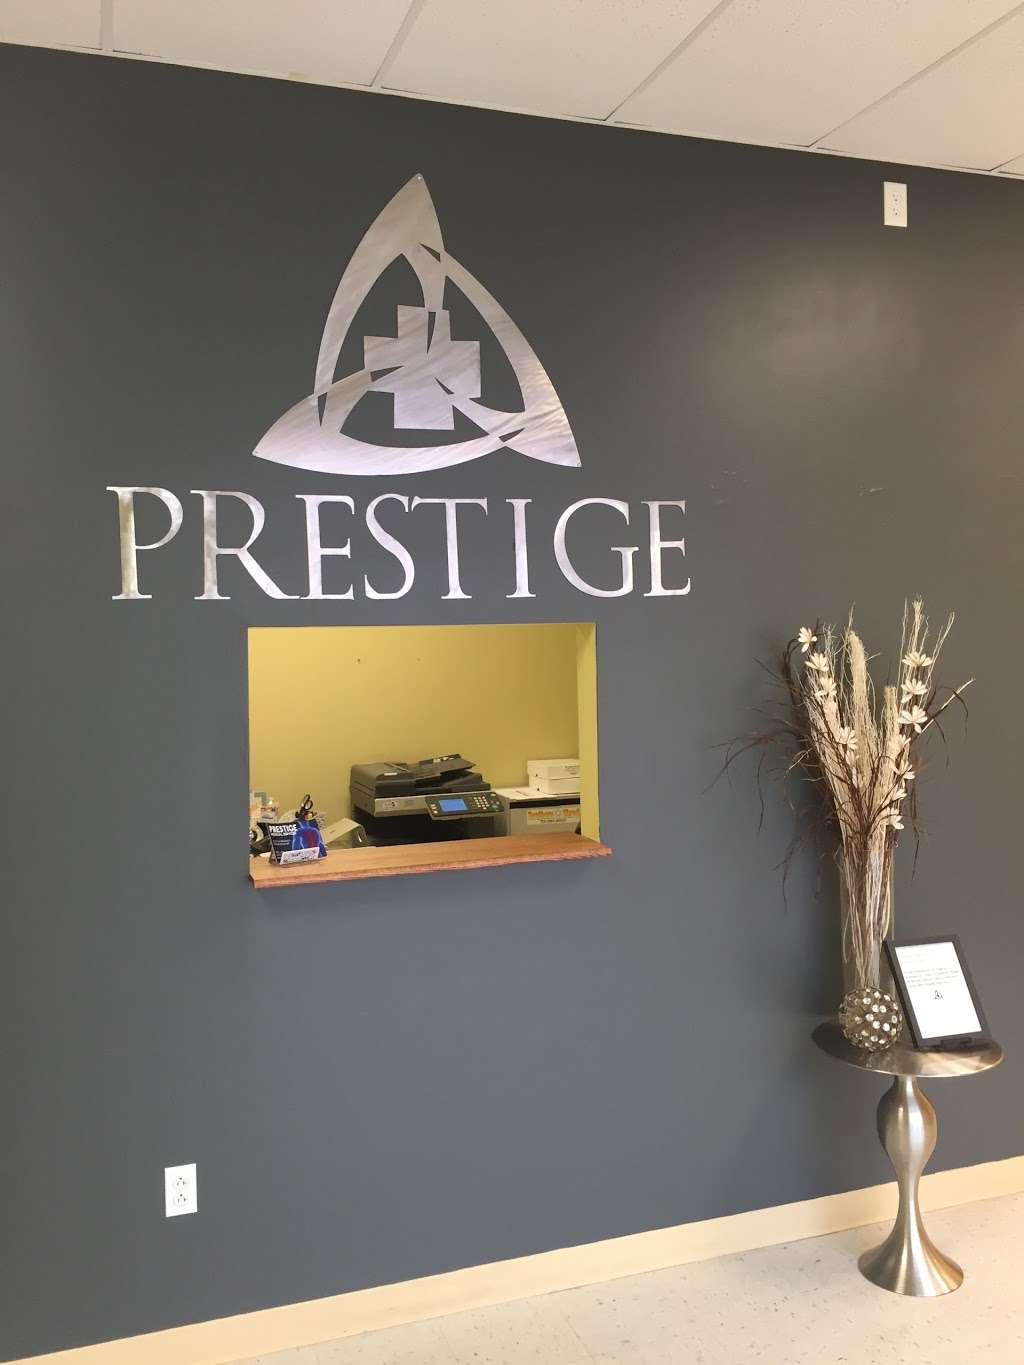 Prestige Medical Services | 2620 Cullen Blvd #214, Pearland, TX 77581, USA | Phone: (281) 741-4880